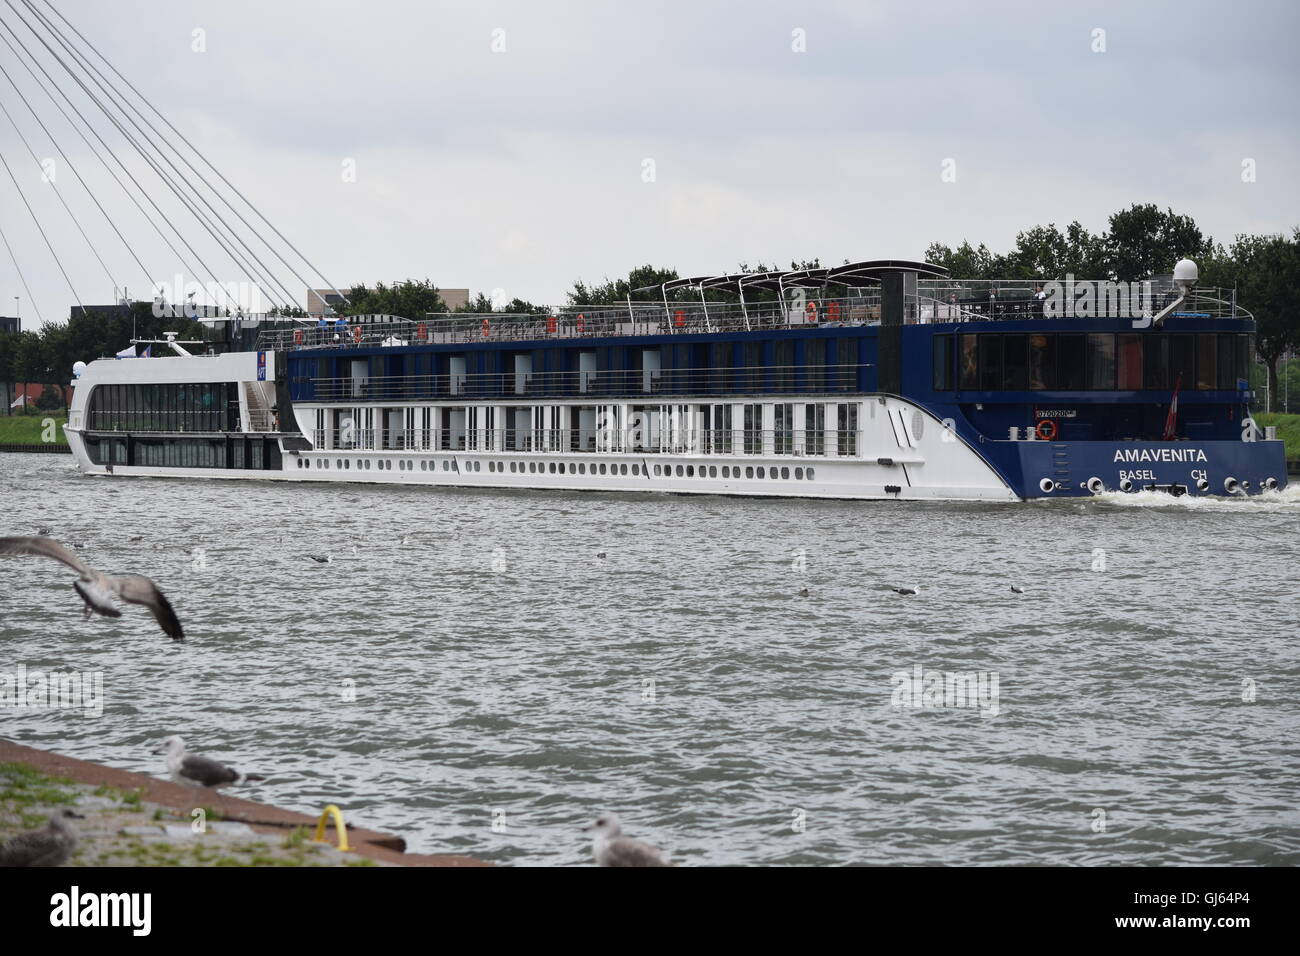 Nave passeggeri sul fiume in Utrecht, Paesi Bassi Foto Stock